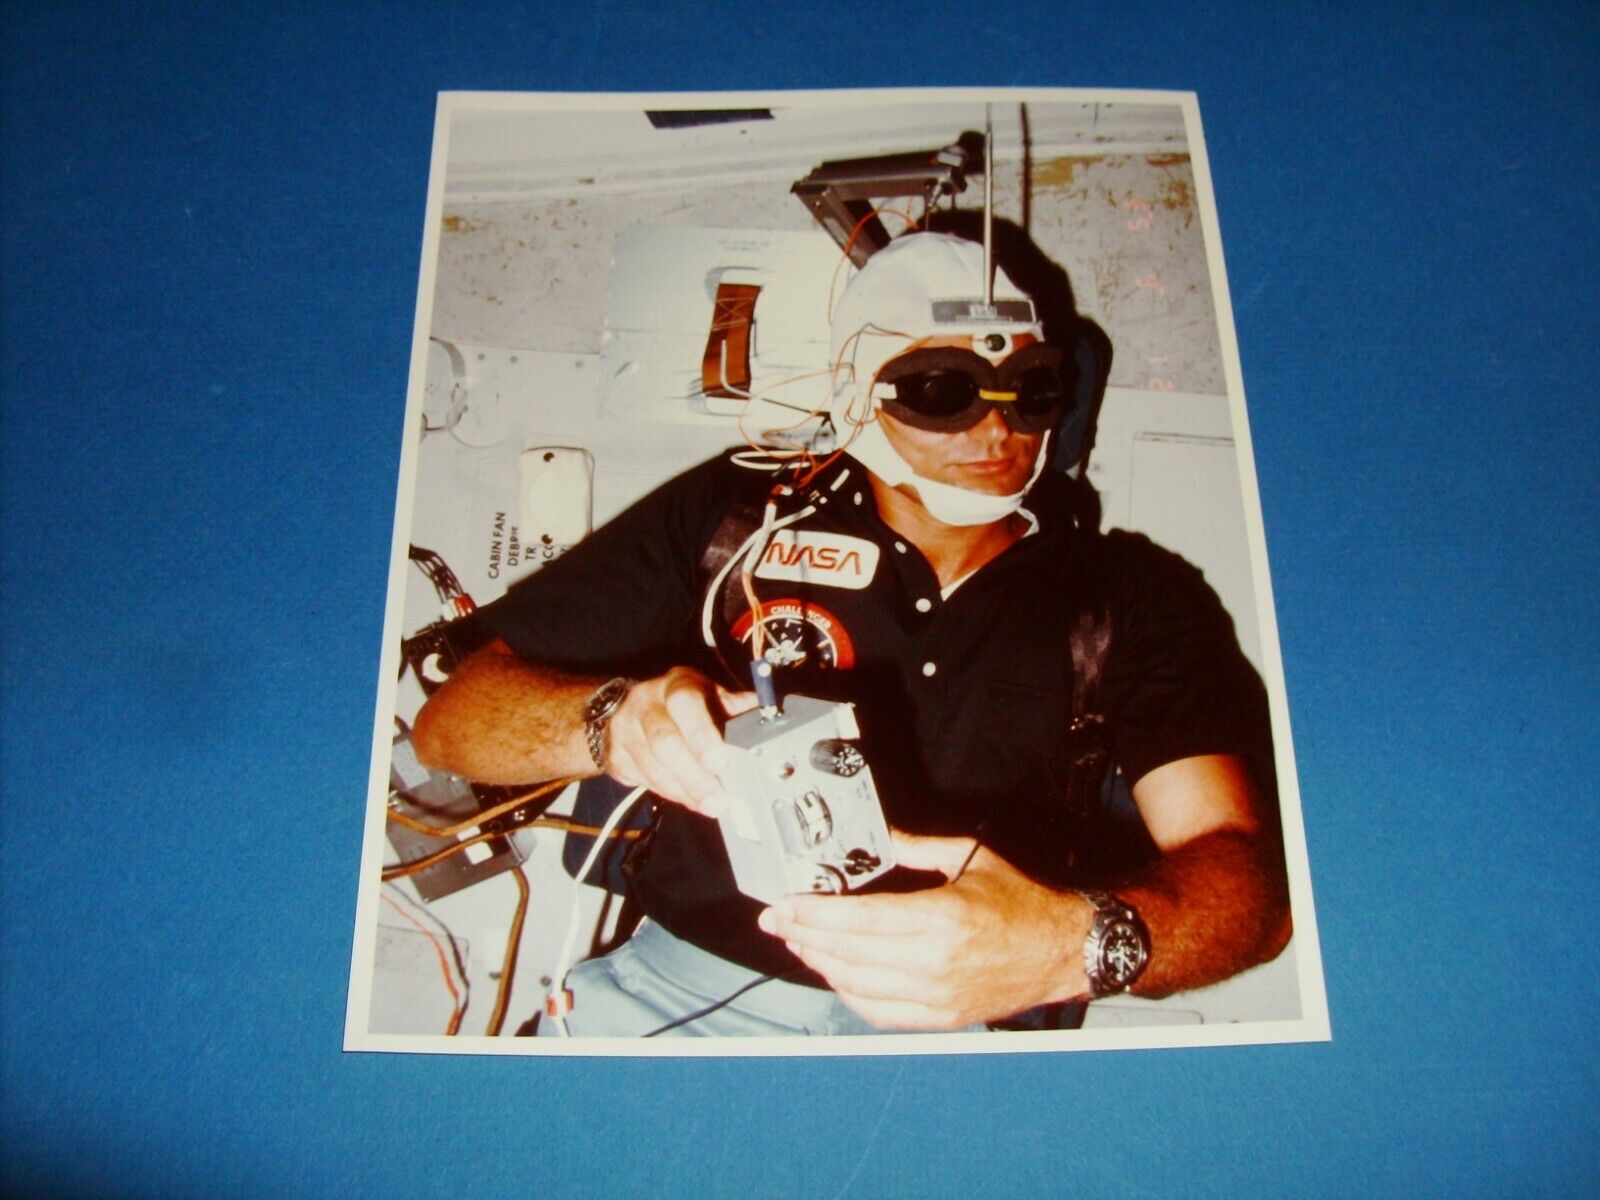 NASA SPACE SHUTTLE CHALLENGER STS-7 ONBOARD SCENE 1983 ORIGINAL PHOTO